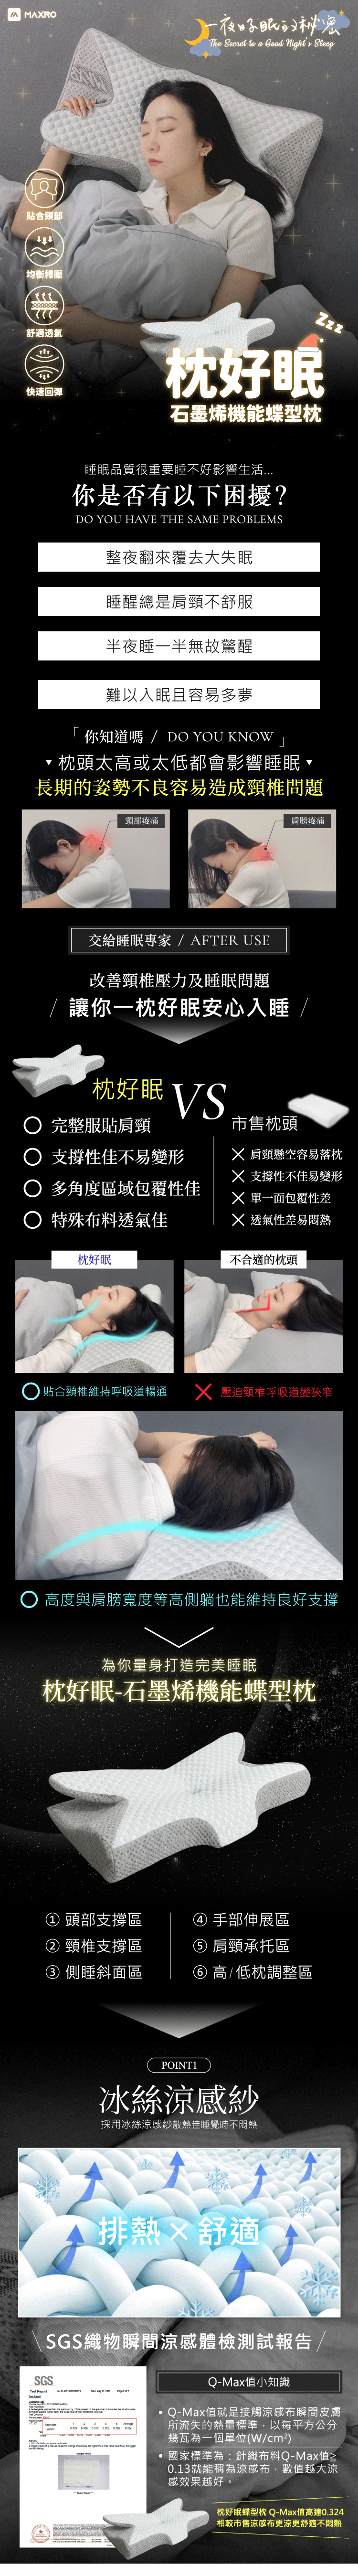 【MAXRO 】枕好眠石墨烯機能蝶型枕(MX-BP01)【一顆】